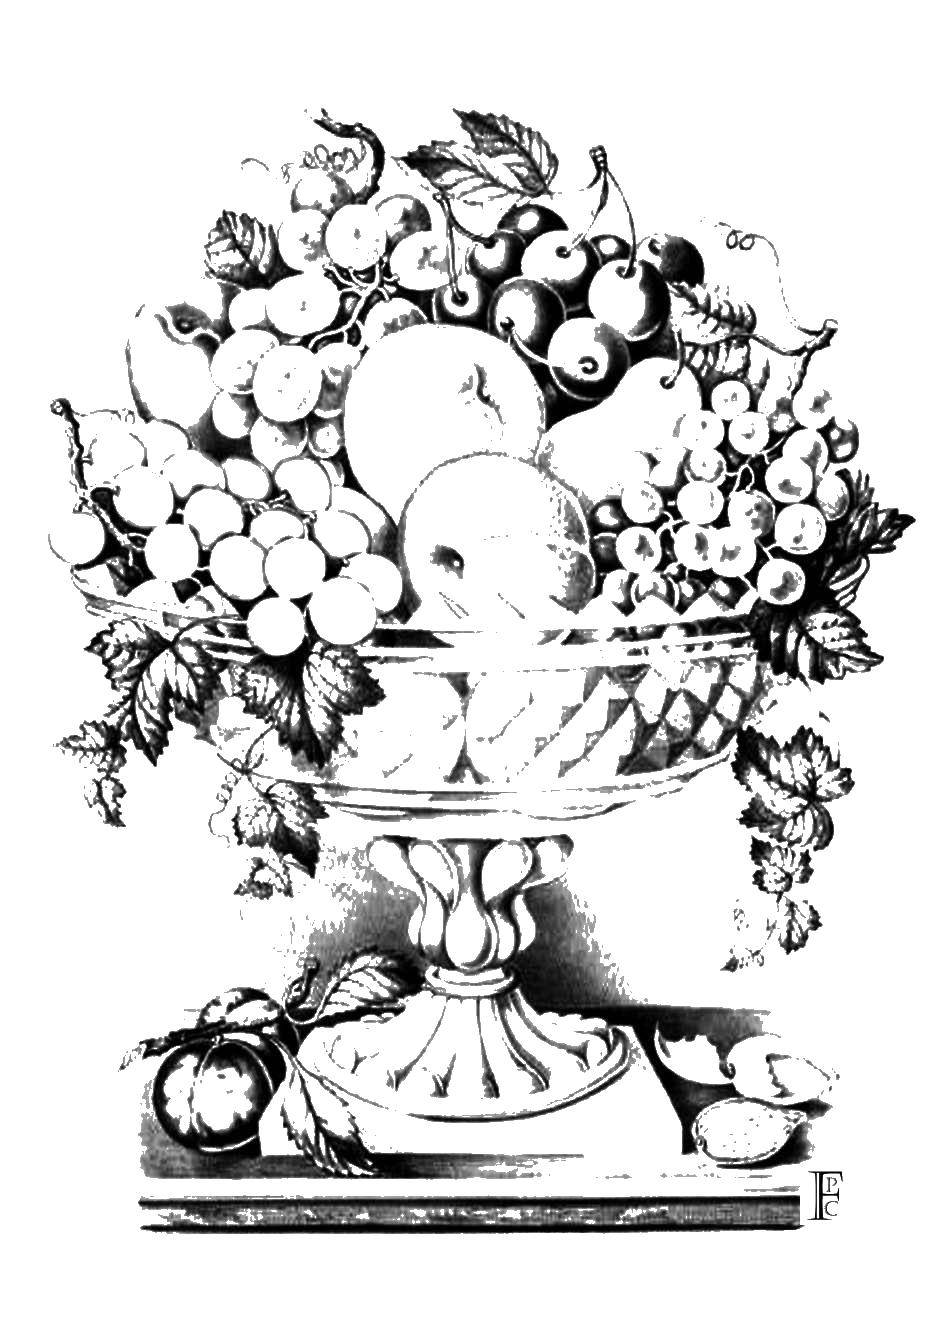 Fruits basket Black and White Stock Photos & Images - Alamy